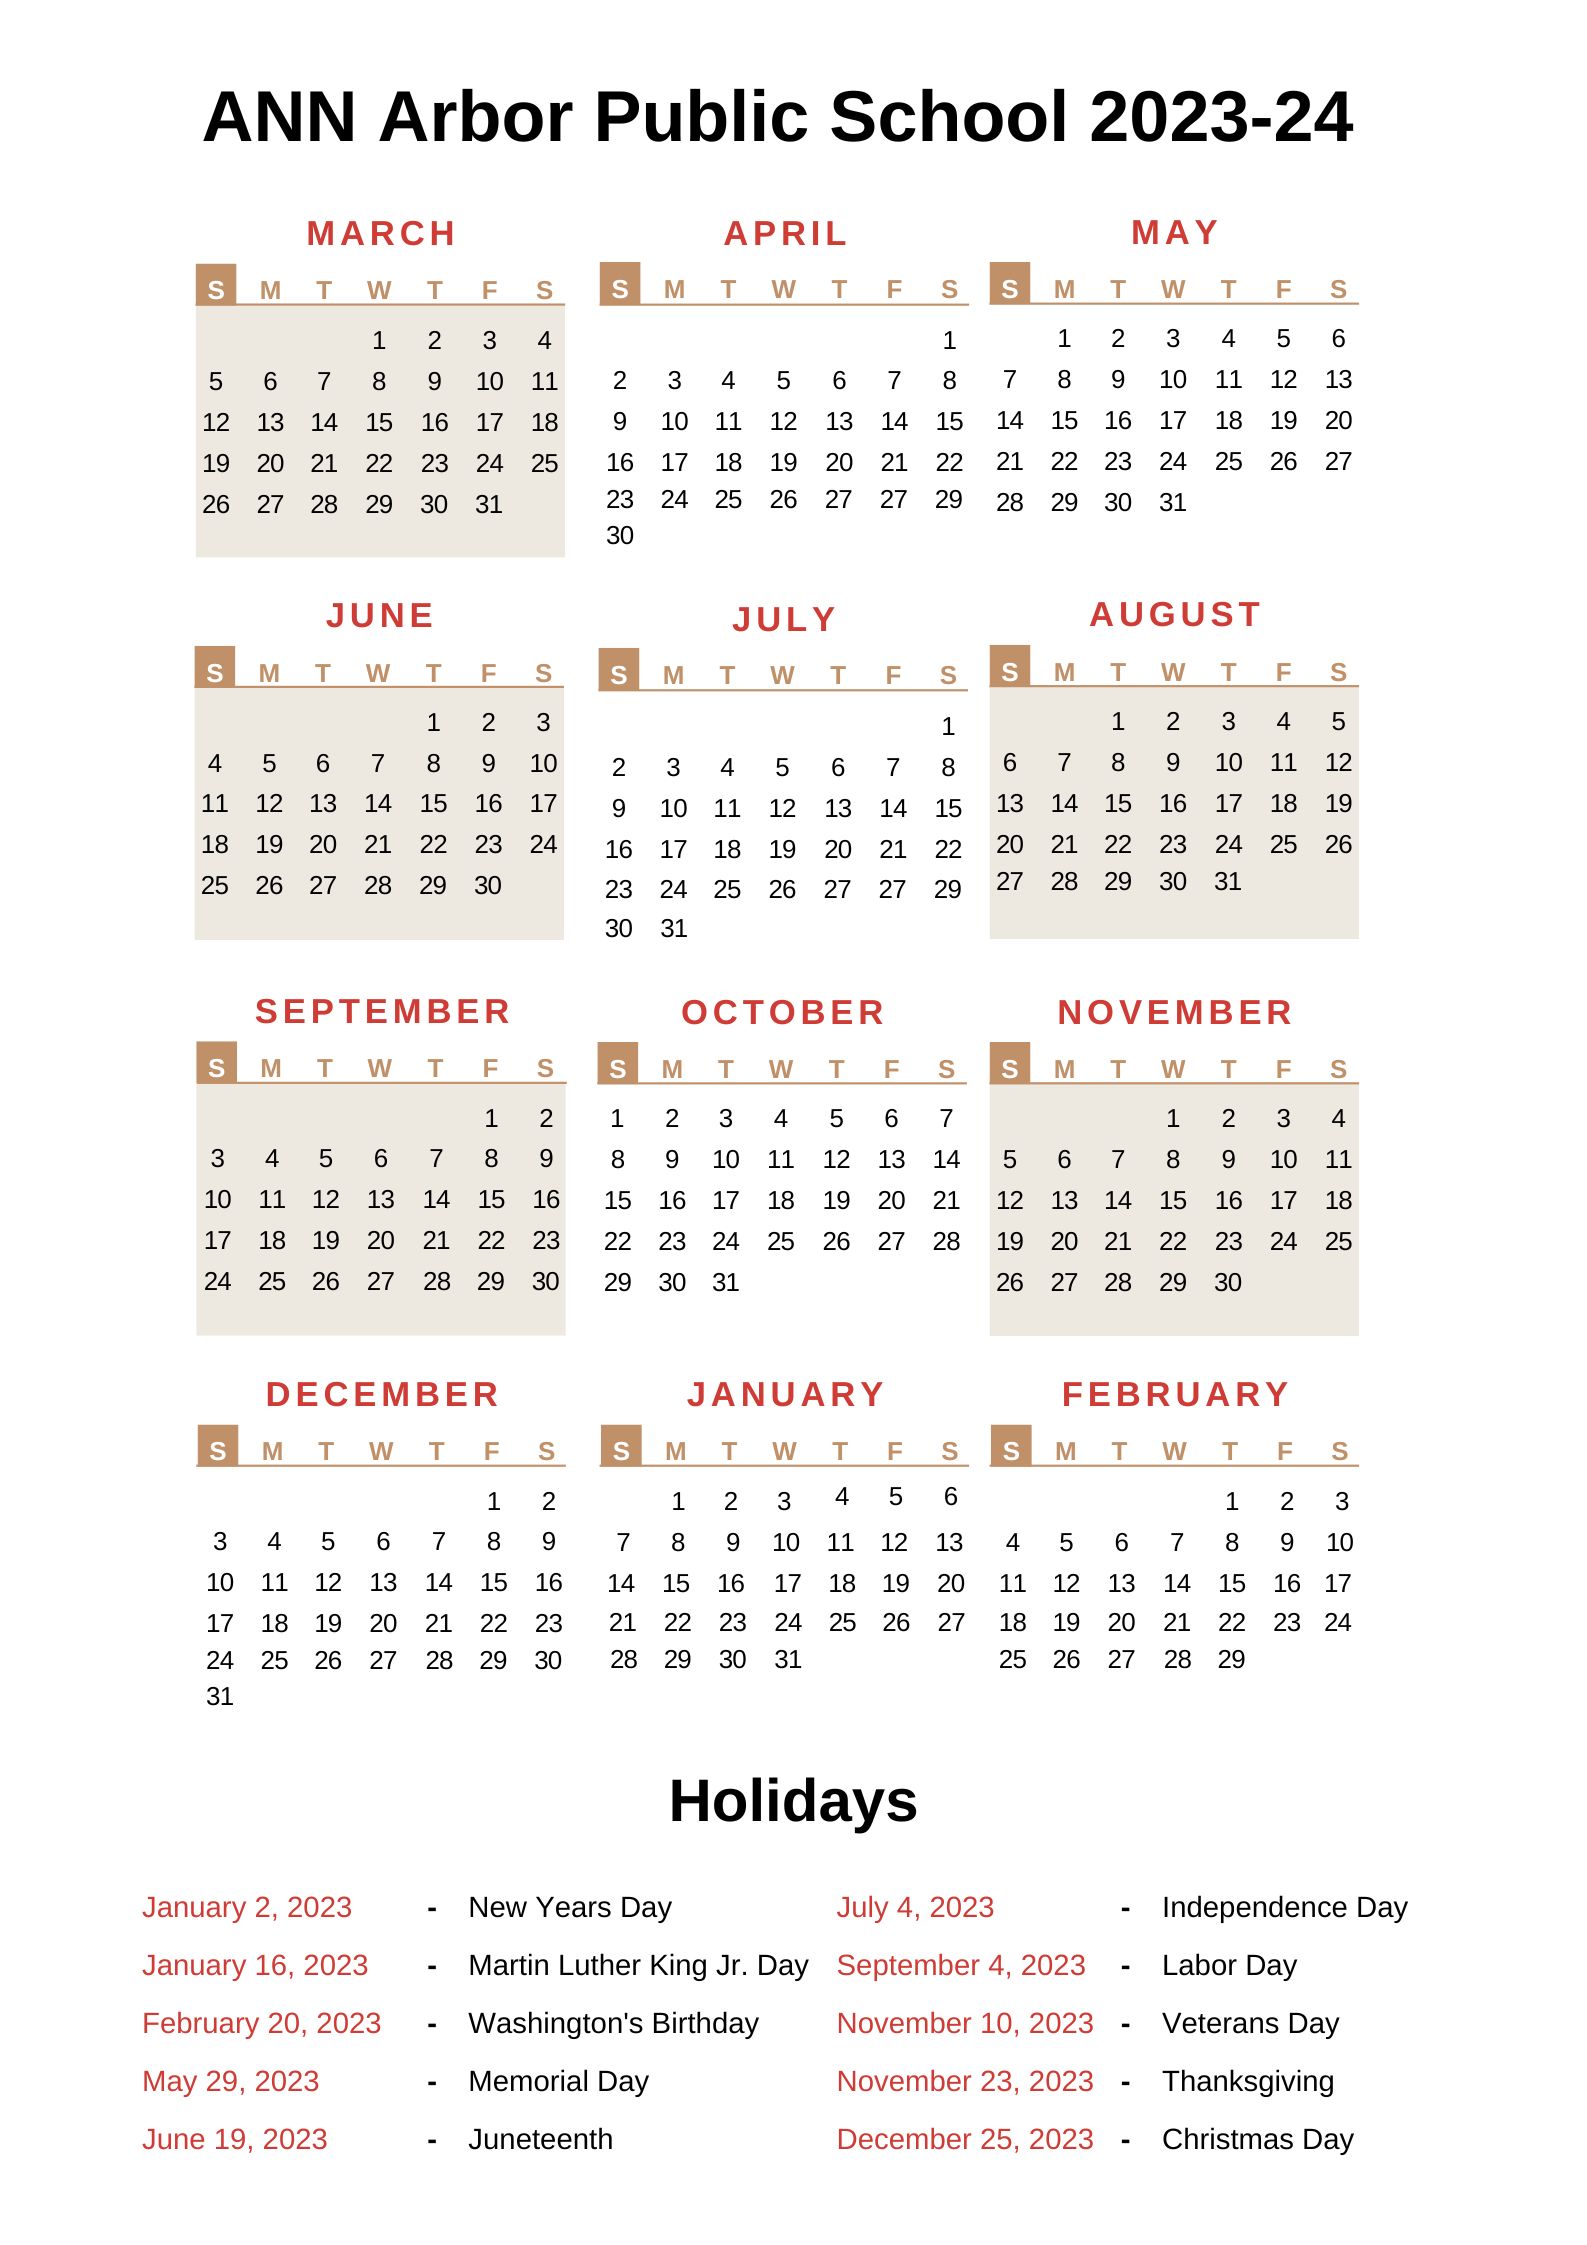 Ann Arbor Public Schools Calendar [AAPS] 202324 with Holidays